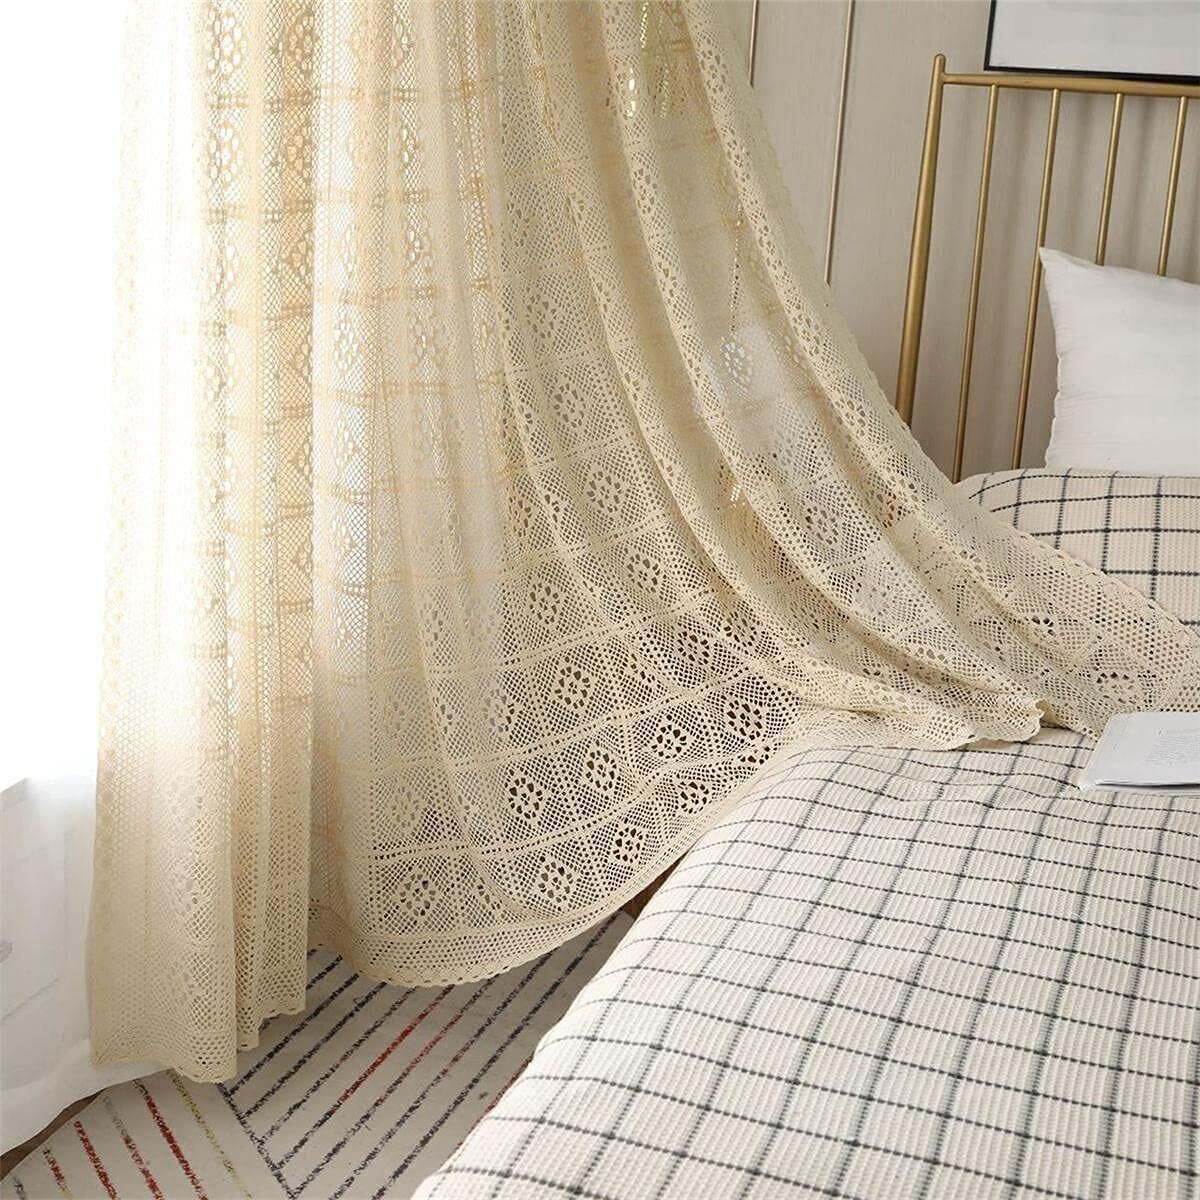 Vintage Crochet Lace Curtain Window Drapes Living Room Boho Farmhouse Home Decor